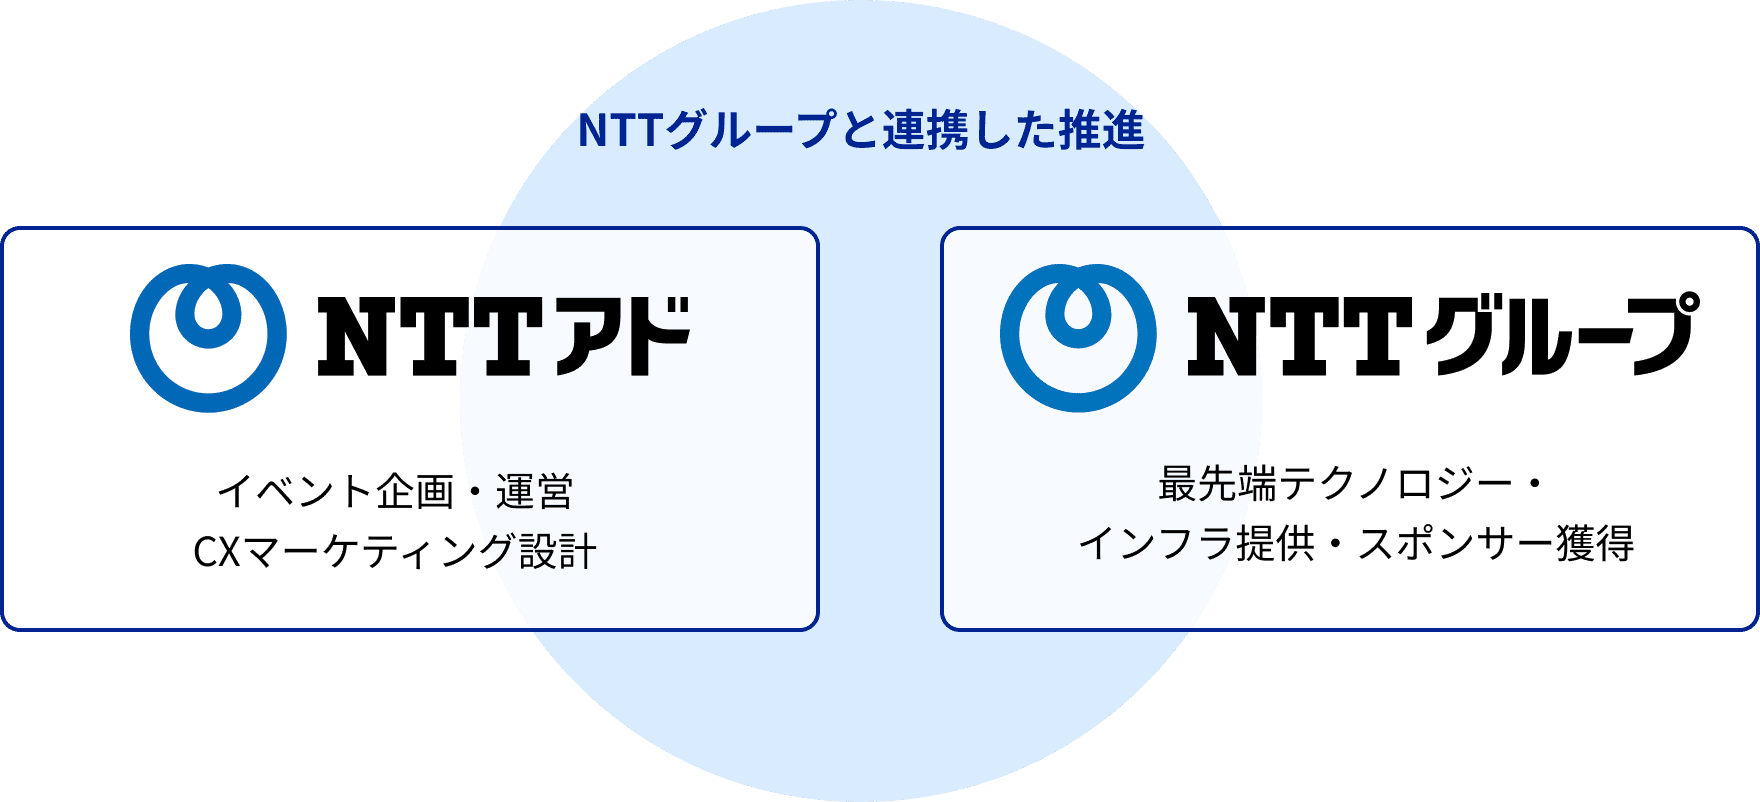 NTTグループと連携した推進  。NTTアド：イベント企画・運営・CXマーケティング設計　NTTグループ：最先端テクノロジー・インフラ提供・スポンサー獲得